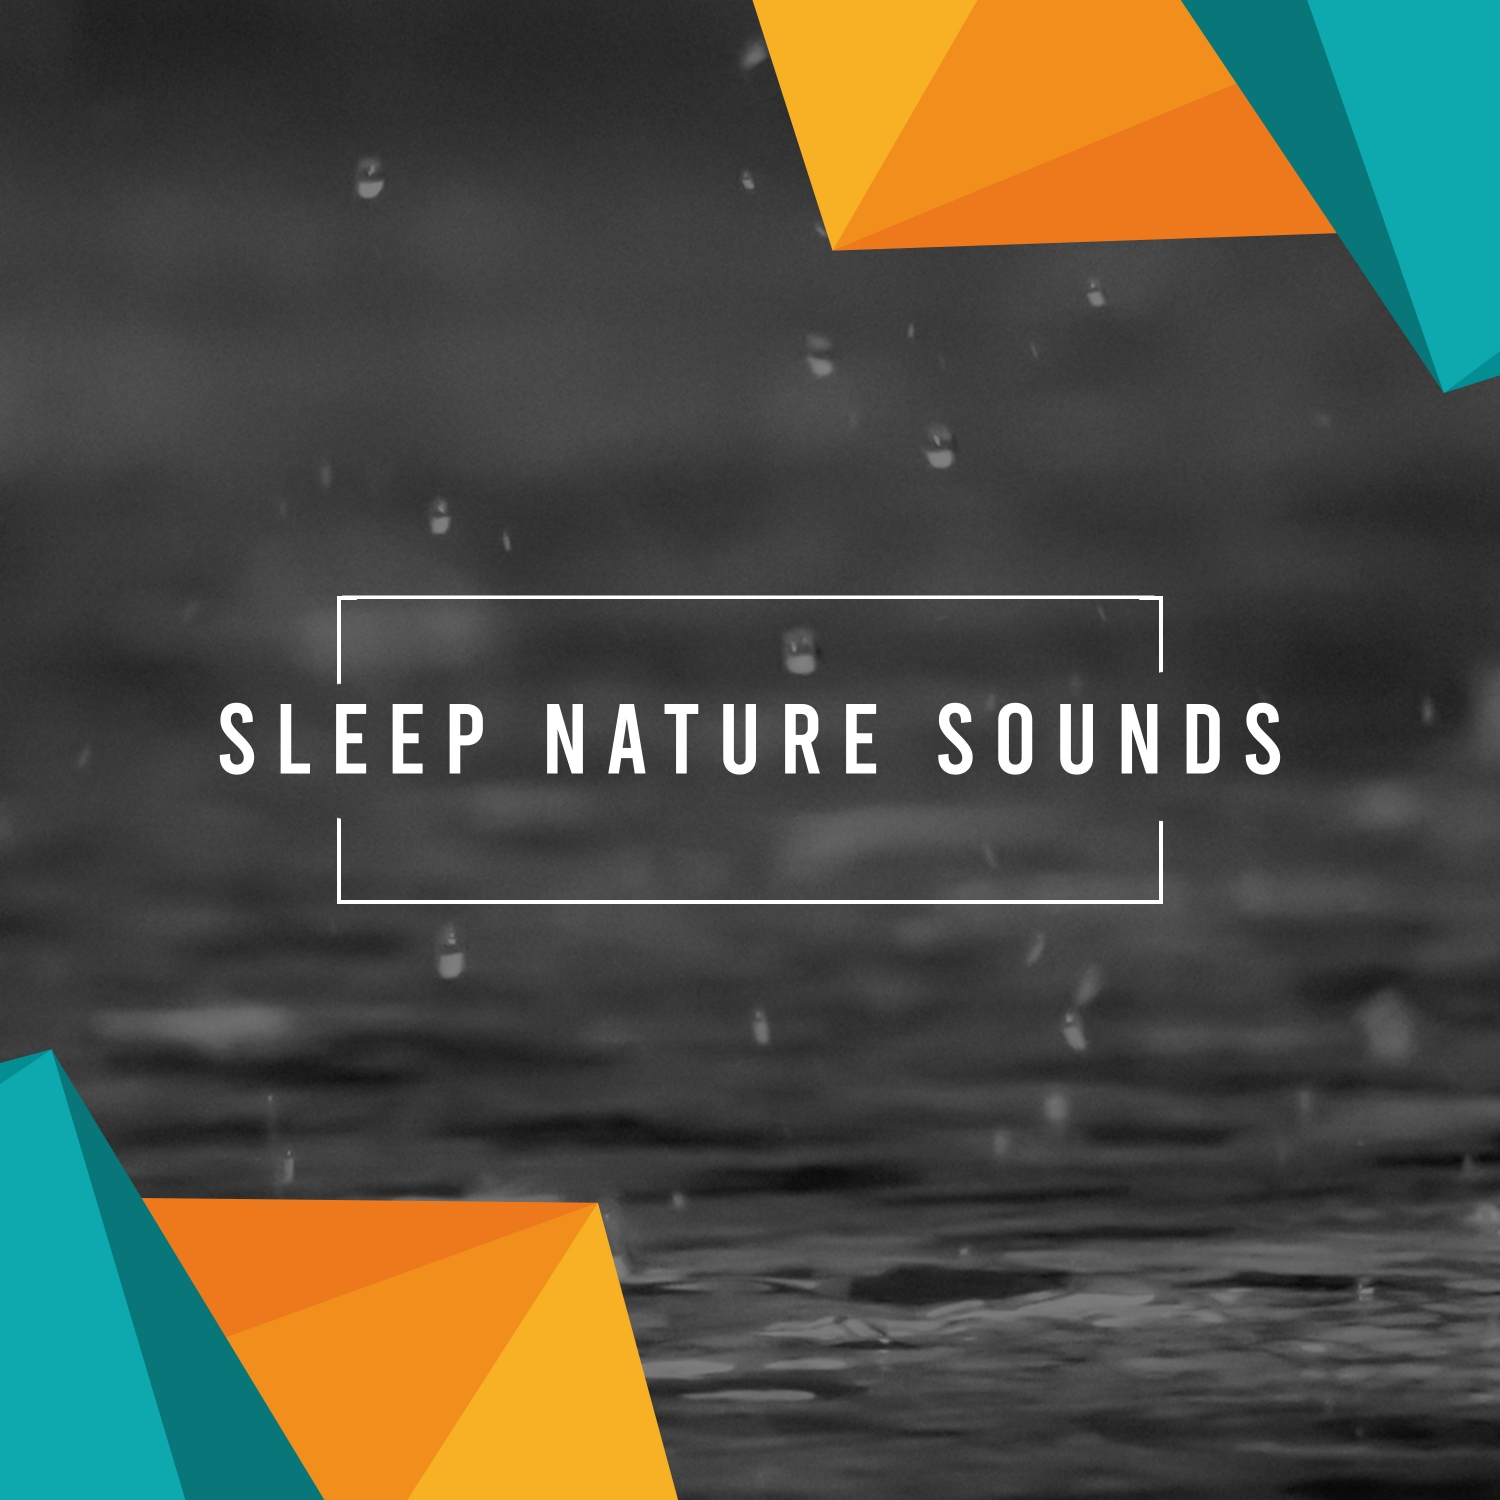 14 Sleep Nature Sounds for Peaceful Sleep or Meditation